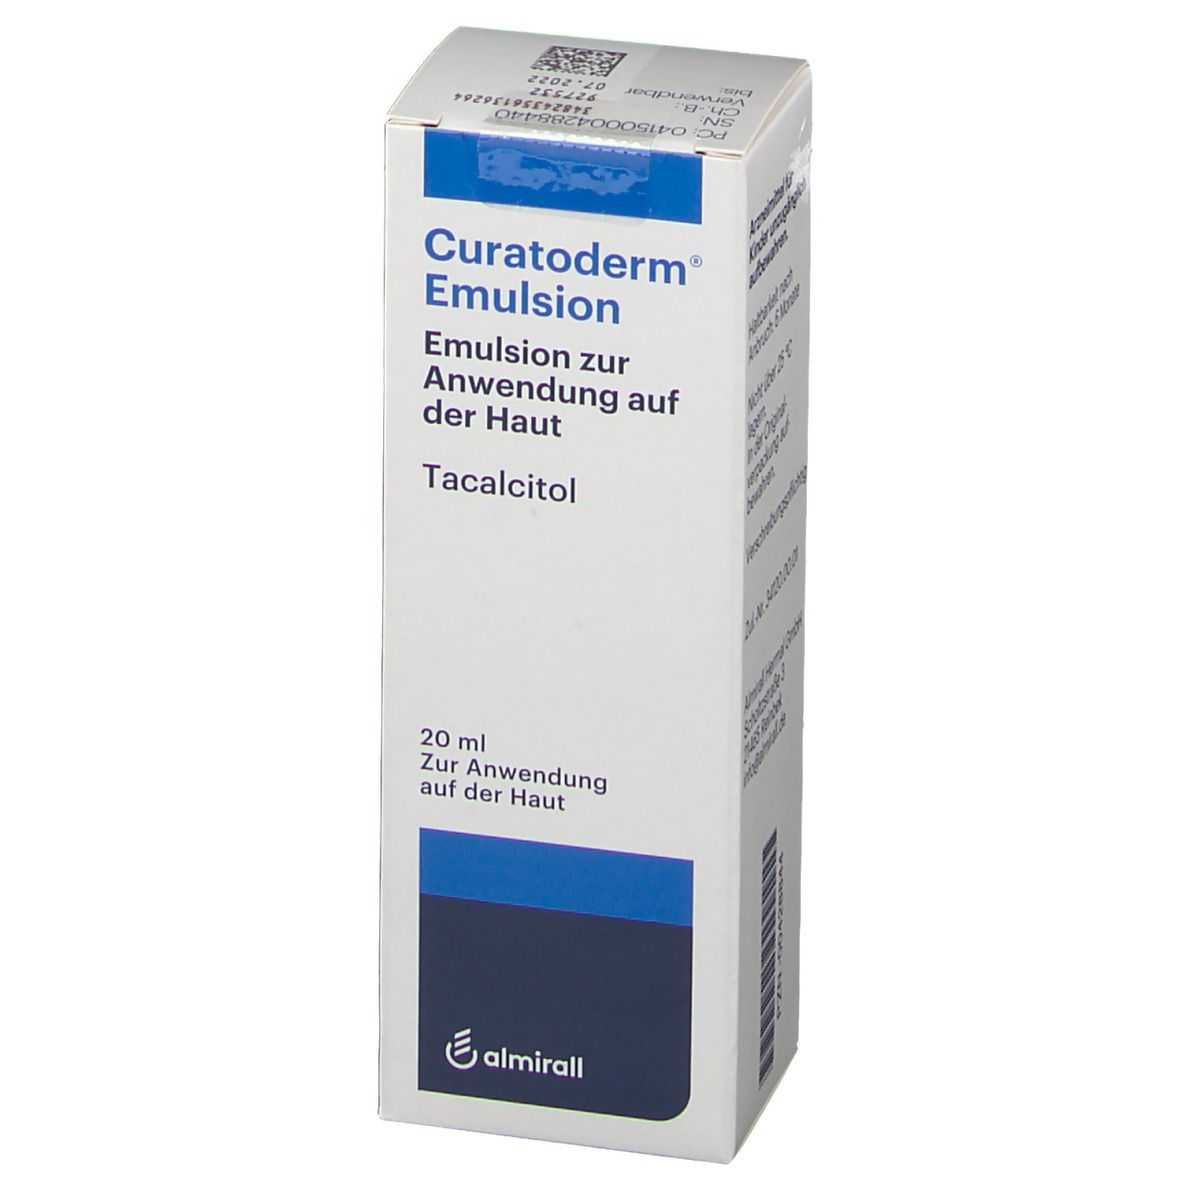 Curatoderm® Emulsion